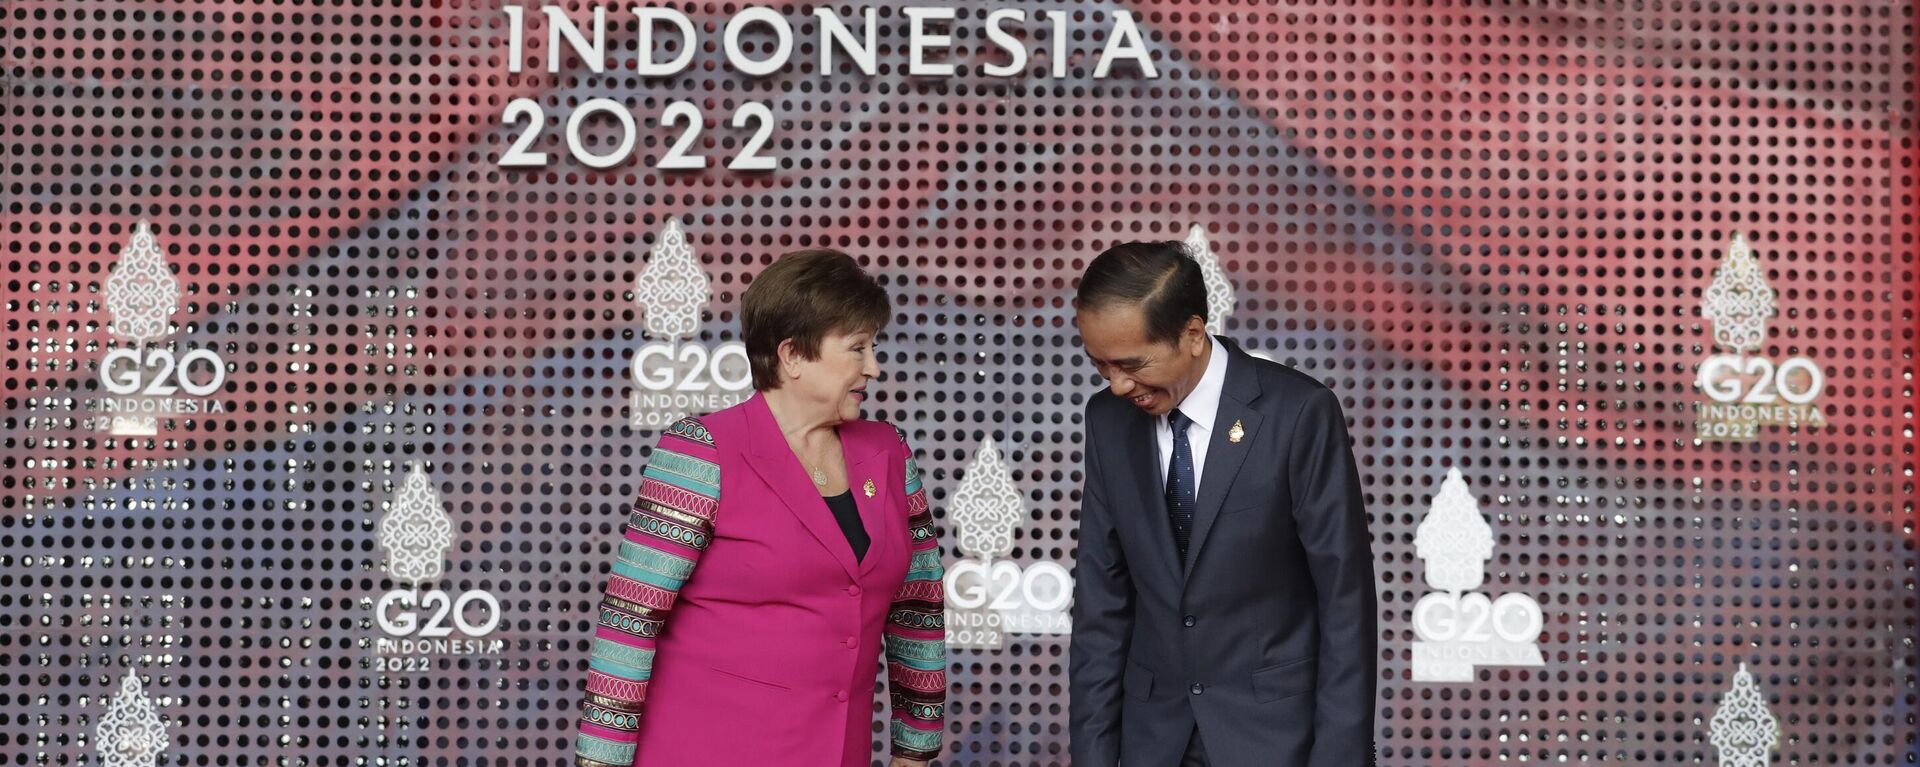 Indonesia President Joko Widodo, left, greets International Monetary Fund (IMF) Managing Director Kristalina Georgieva during the G20 Summit in Nusa Dua, Bali, Indonesia, Tuesday Nov. 15, 2022. - Sputnik International, 1920, 15.11.2022